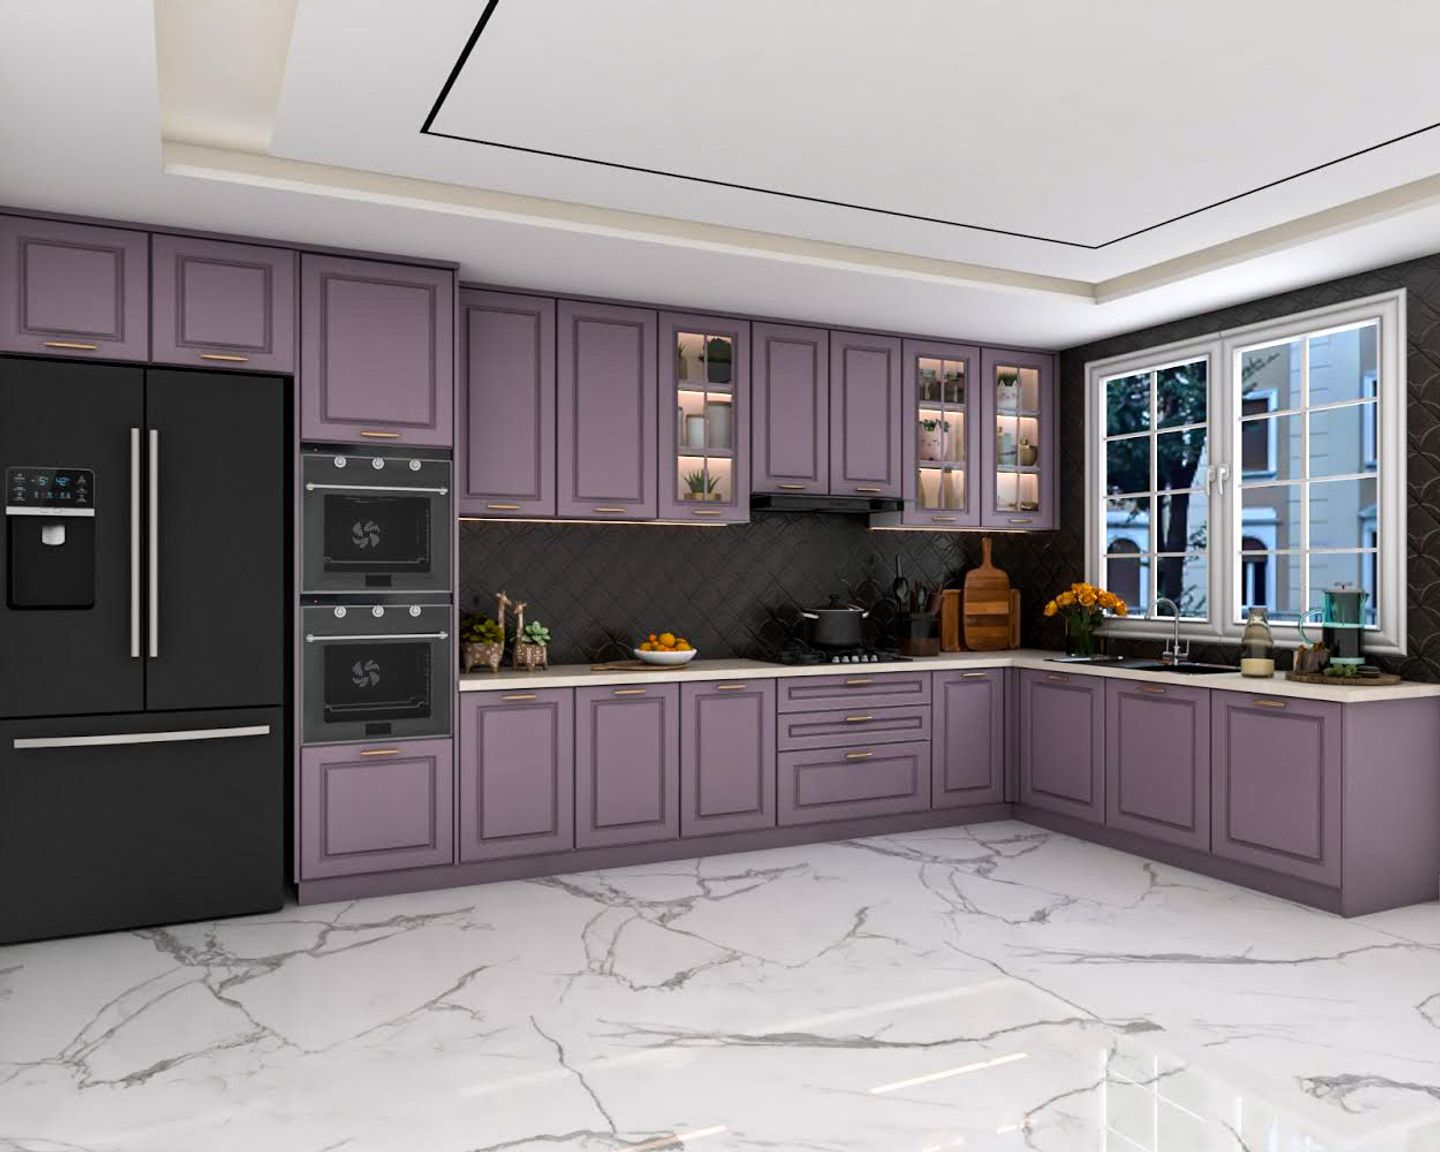 15x12 Ft  L-Shaped Modular Kitchen Design With Purple Lilla Fiore Cabinets And Black Dado Tiles - Livspace